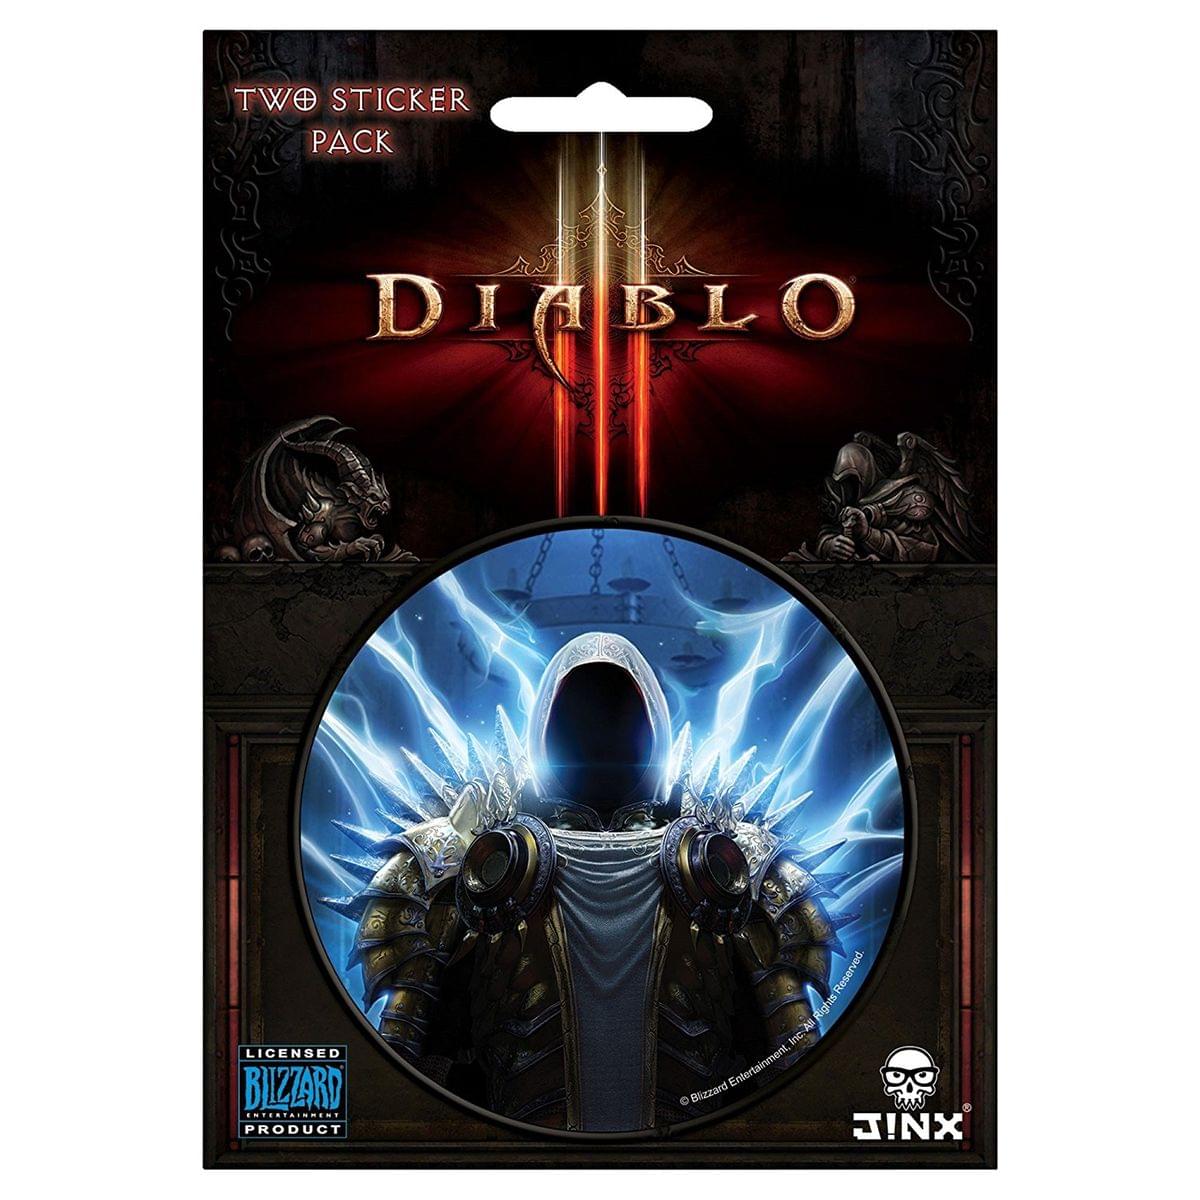 Diablo III 3" Round Sticker 2-Pack: Tyrael